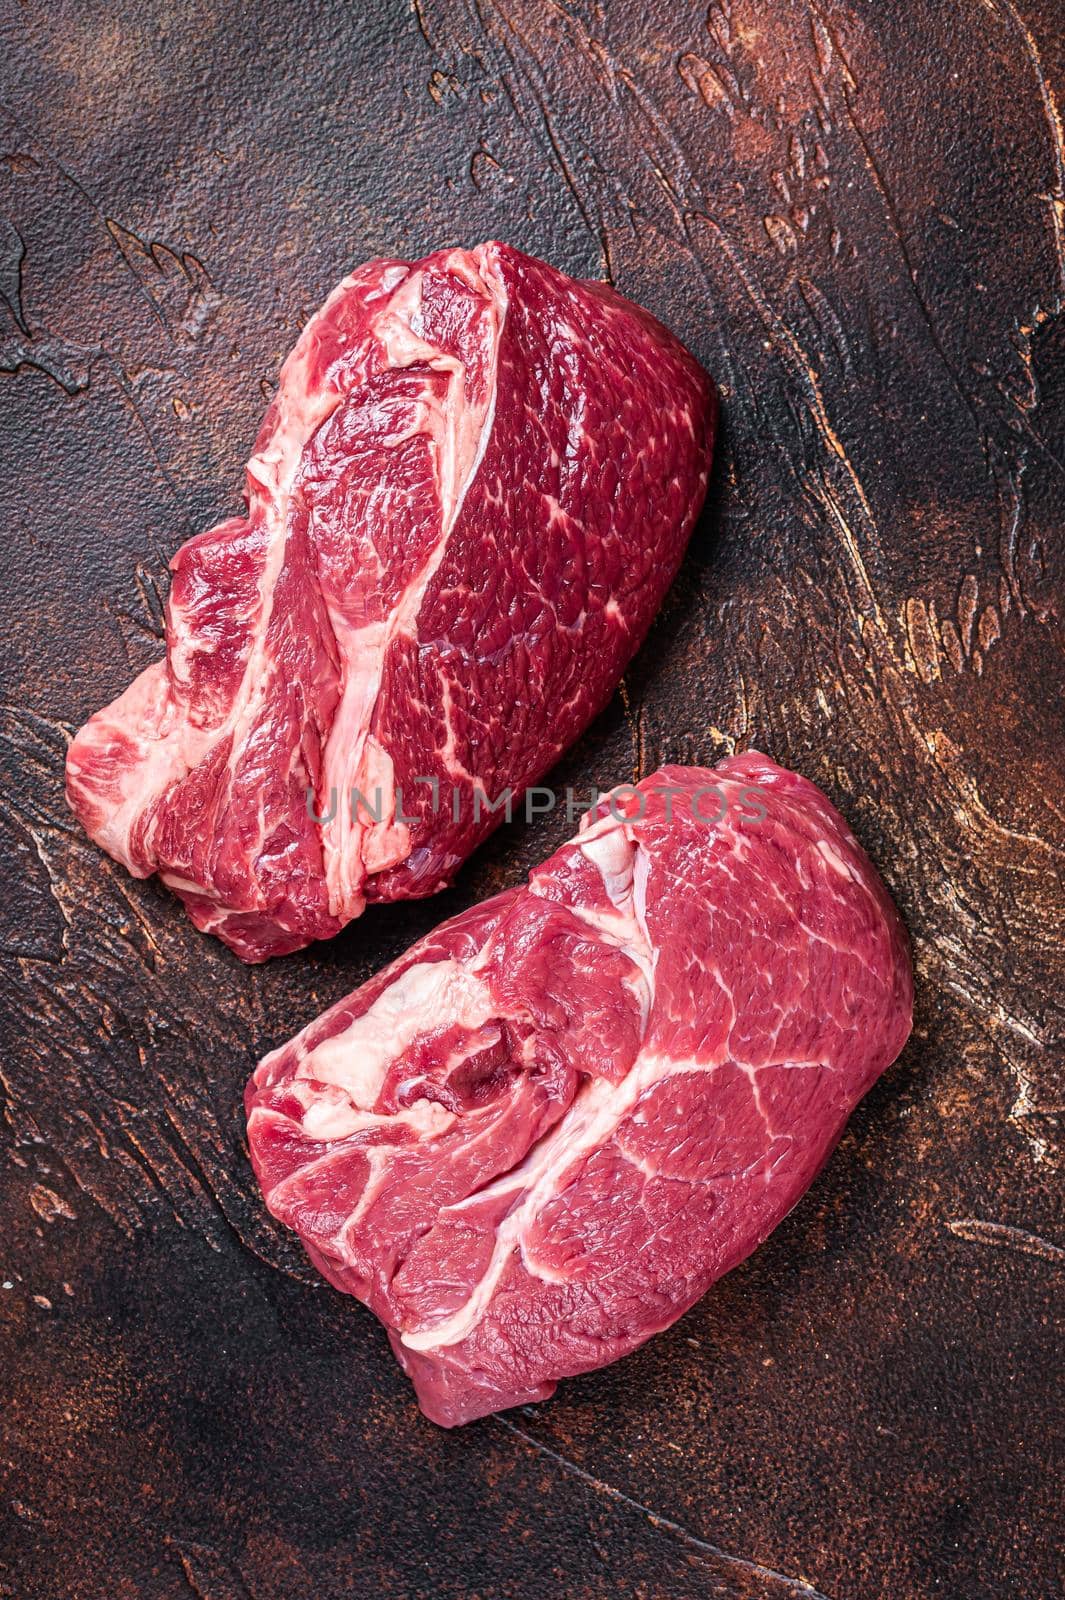 Raw Chuck eye roll beef steak on butcher table. Dark background. Top view.